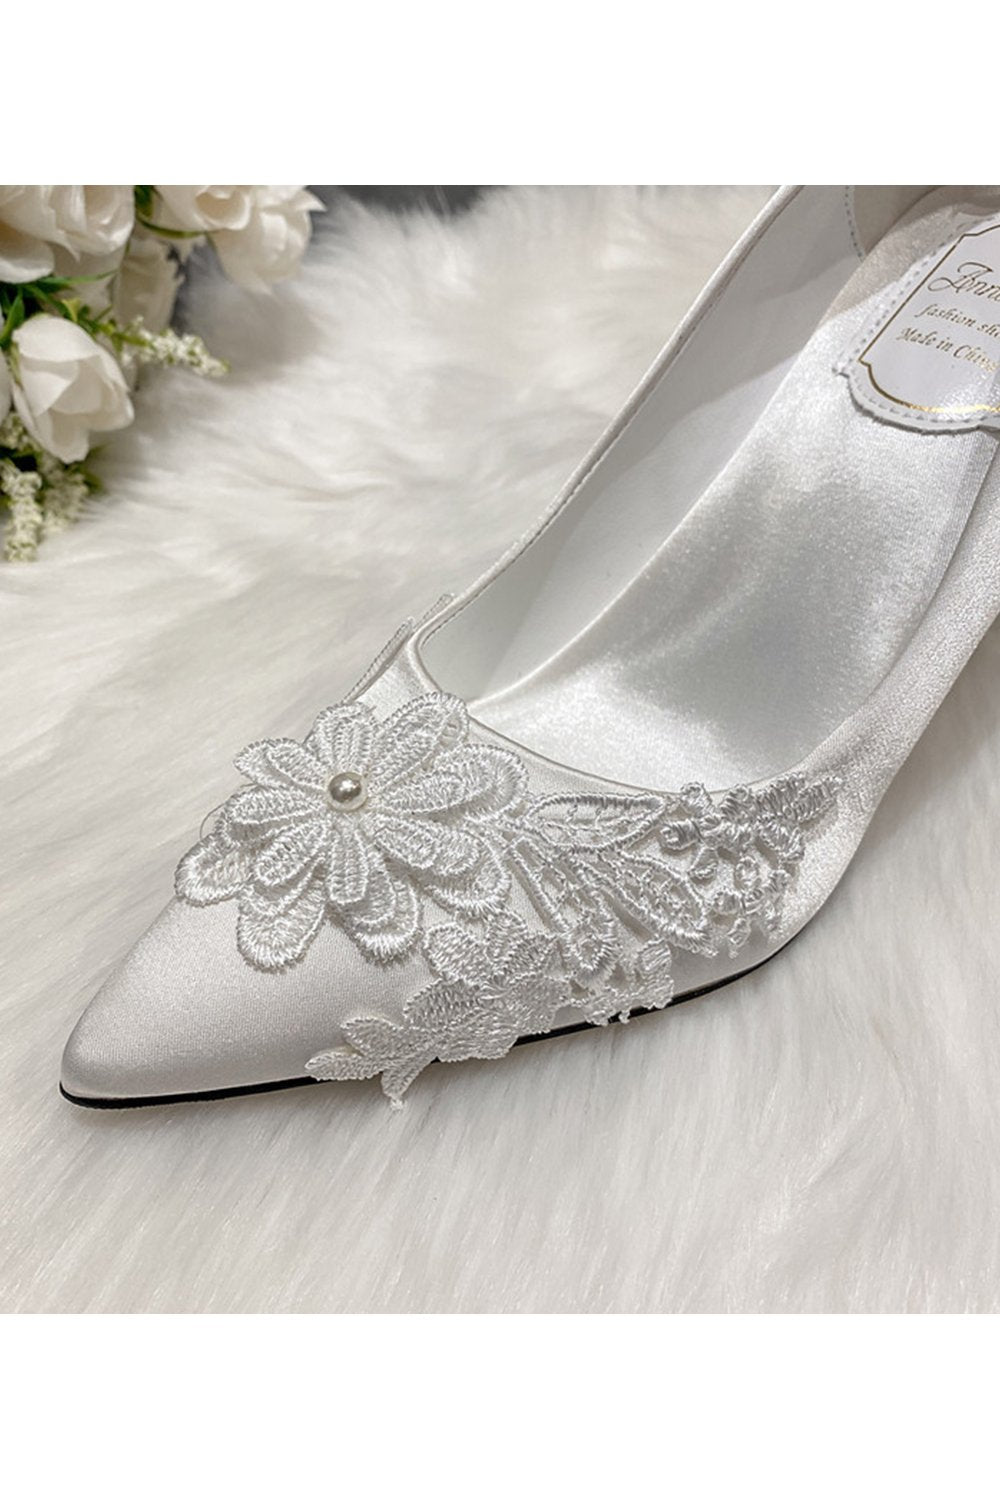 Stiletto Heel 9cm Satin Heels Bridal Shoes CK0113